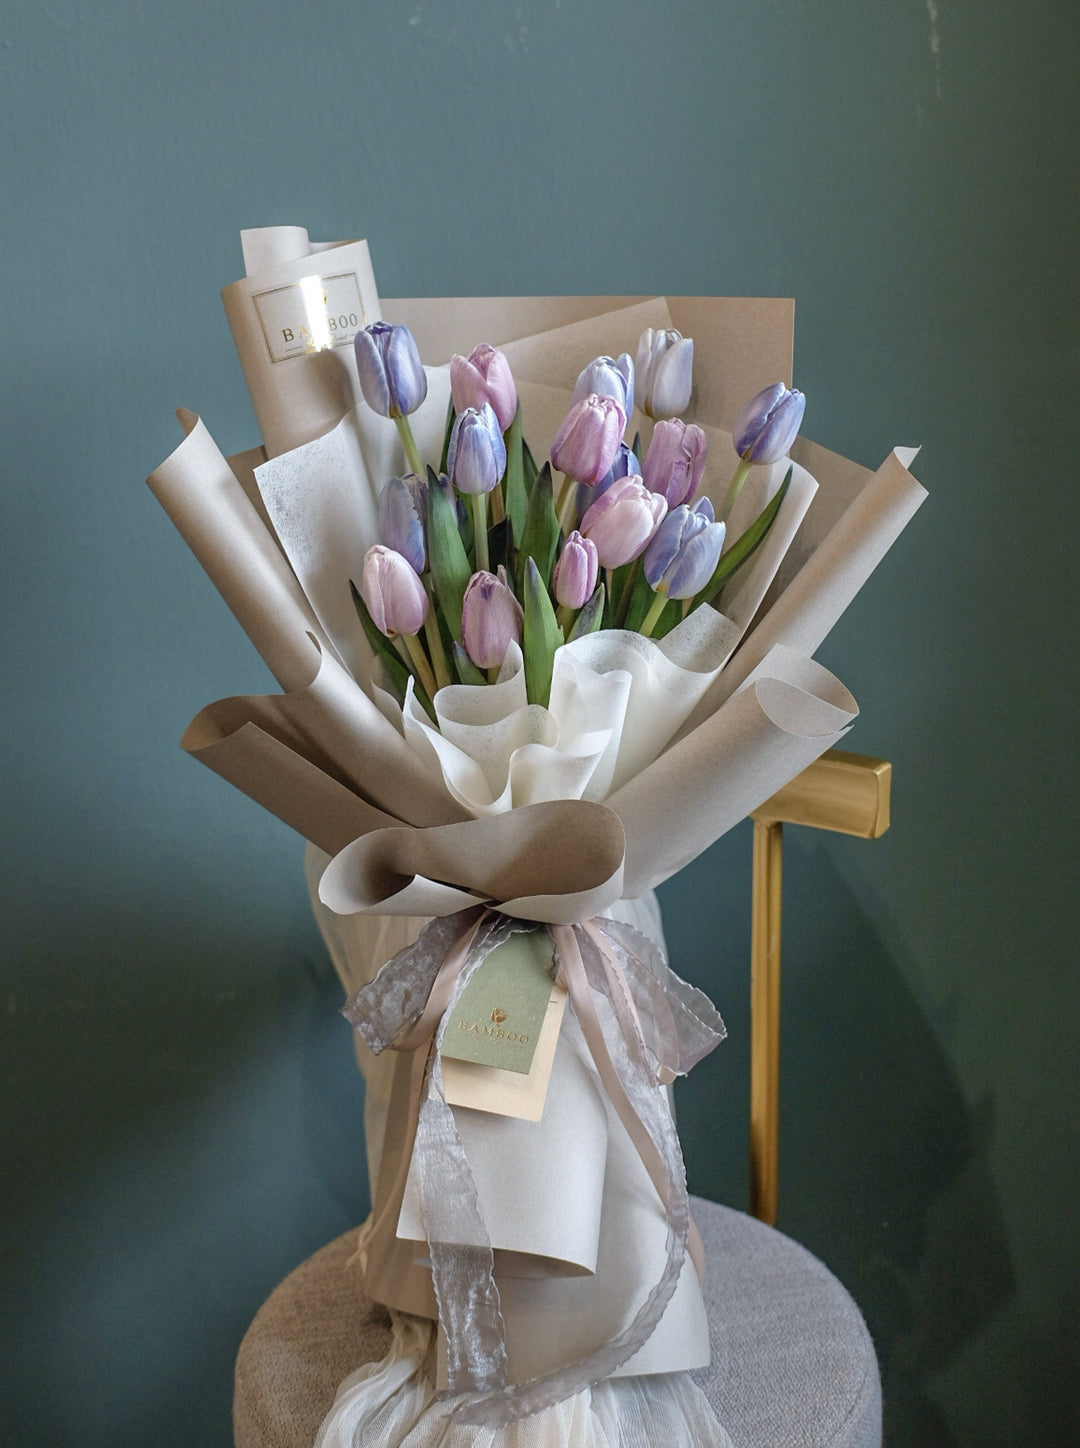 buy tulips in penang, fresh Hoilland tulips in penang by designer florist.